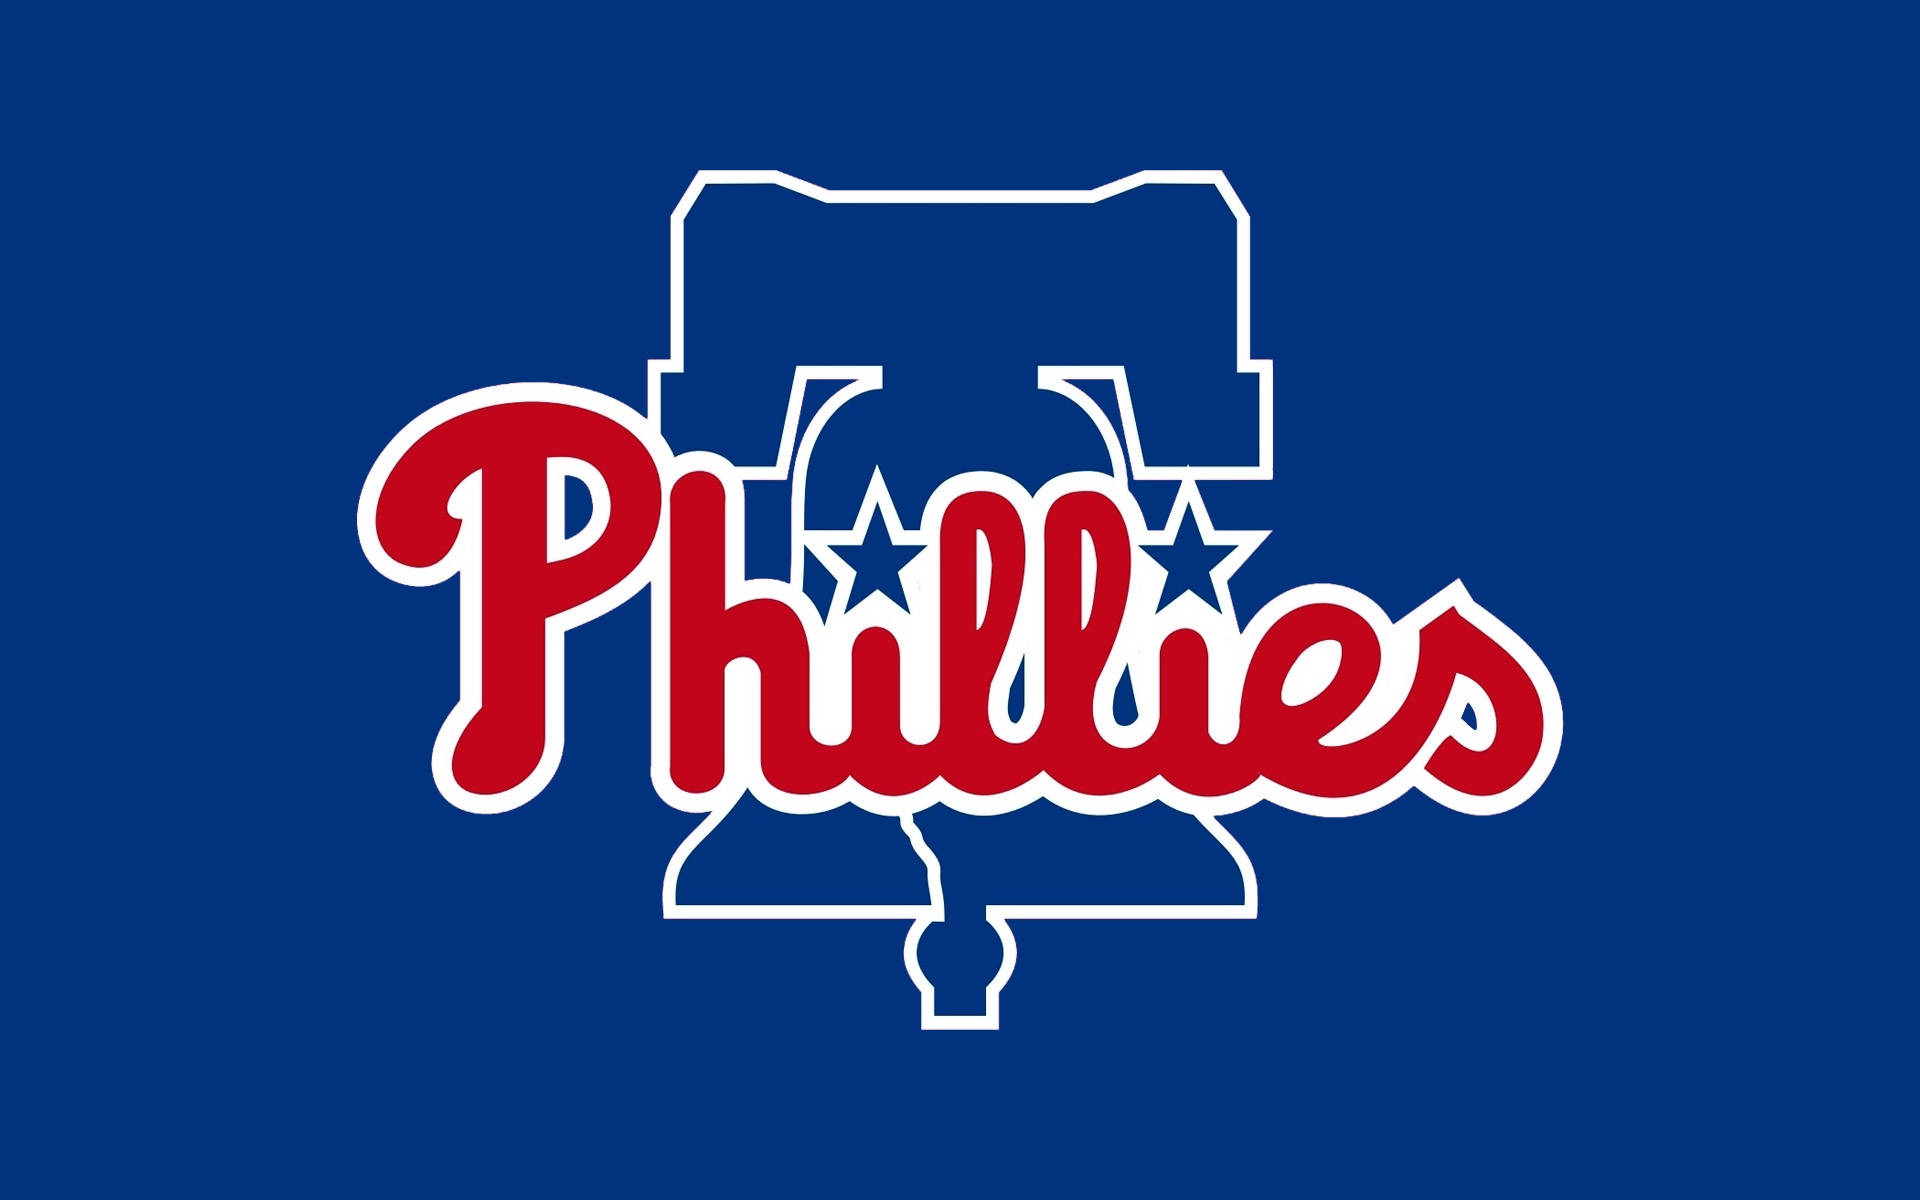 Philadelphia Phillies Baseball Team Background